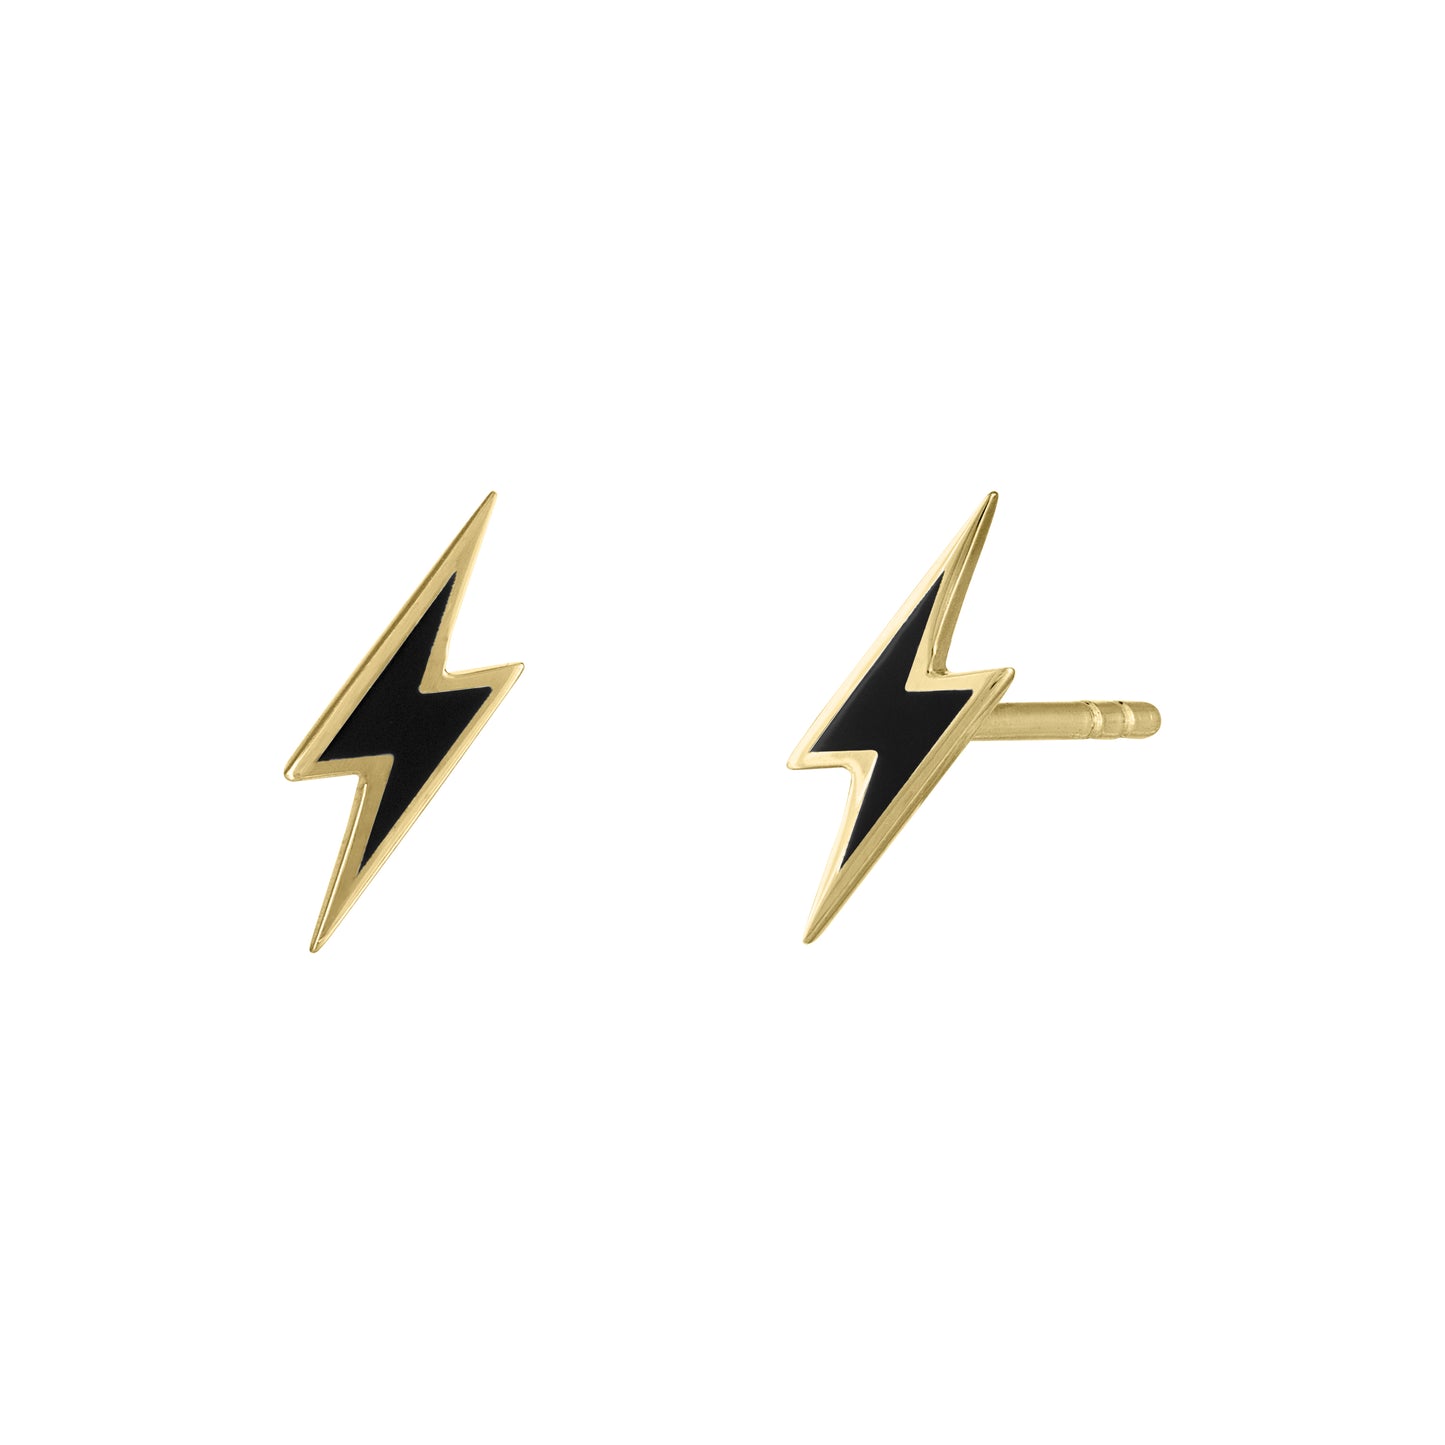 Yellow gold pair of lightning bolt earrings with black enamel.